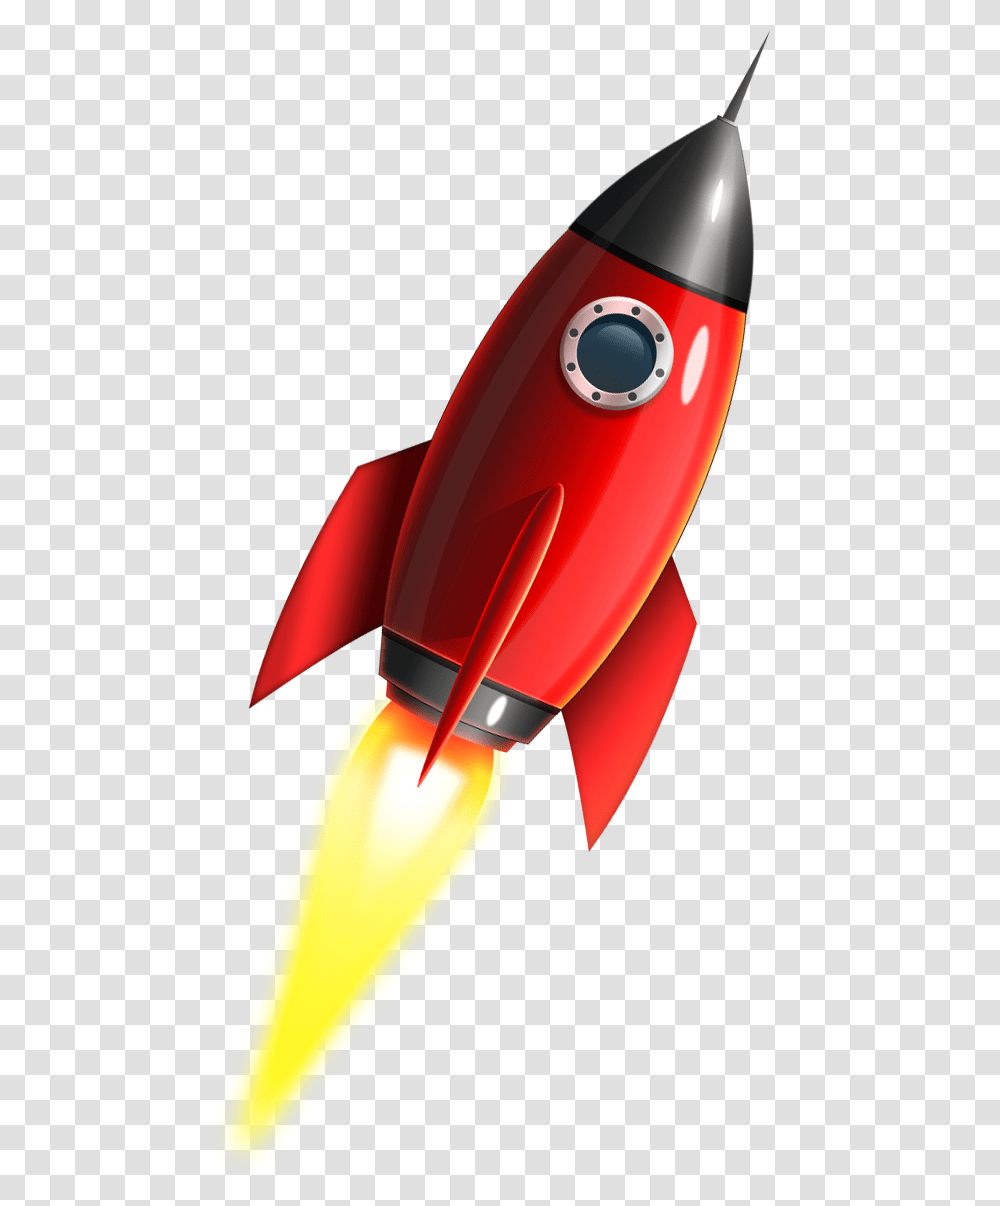 Background Rocket Rocket, Appliance, Launch, Vacuum Cleaner, Blow Dryer Transparent Png